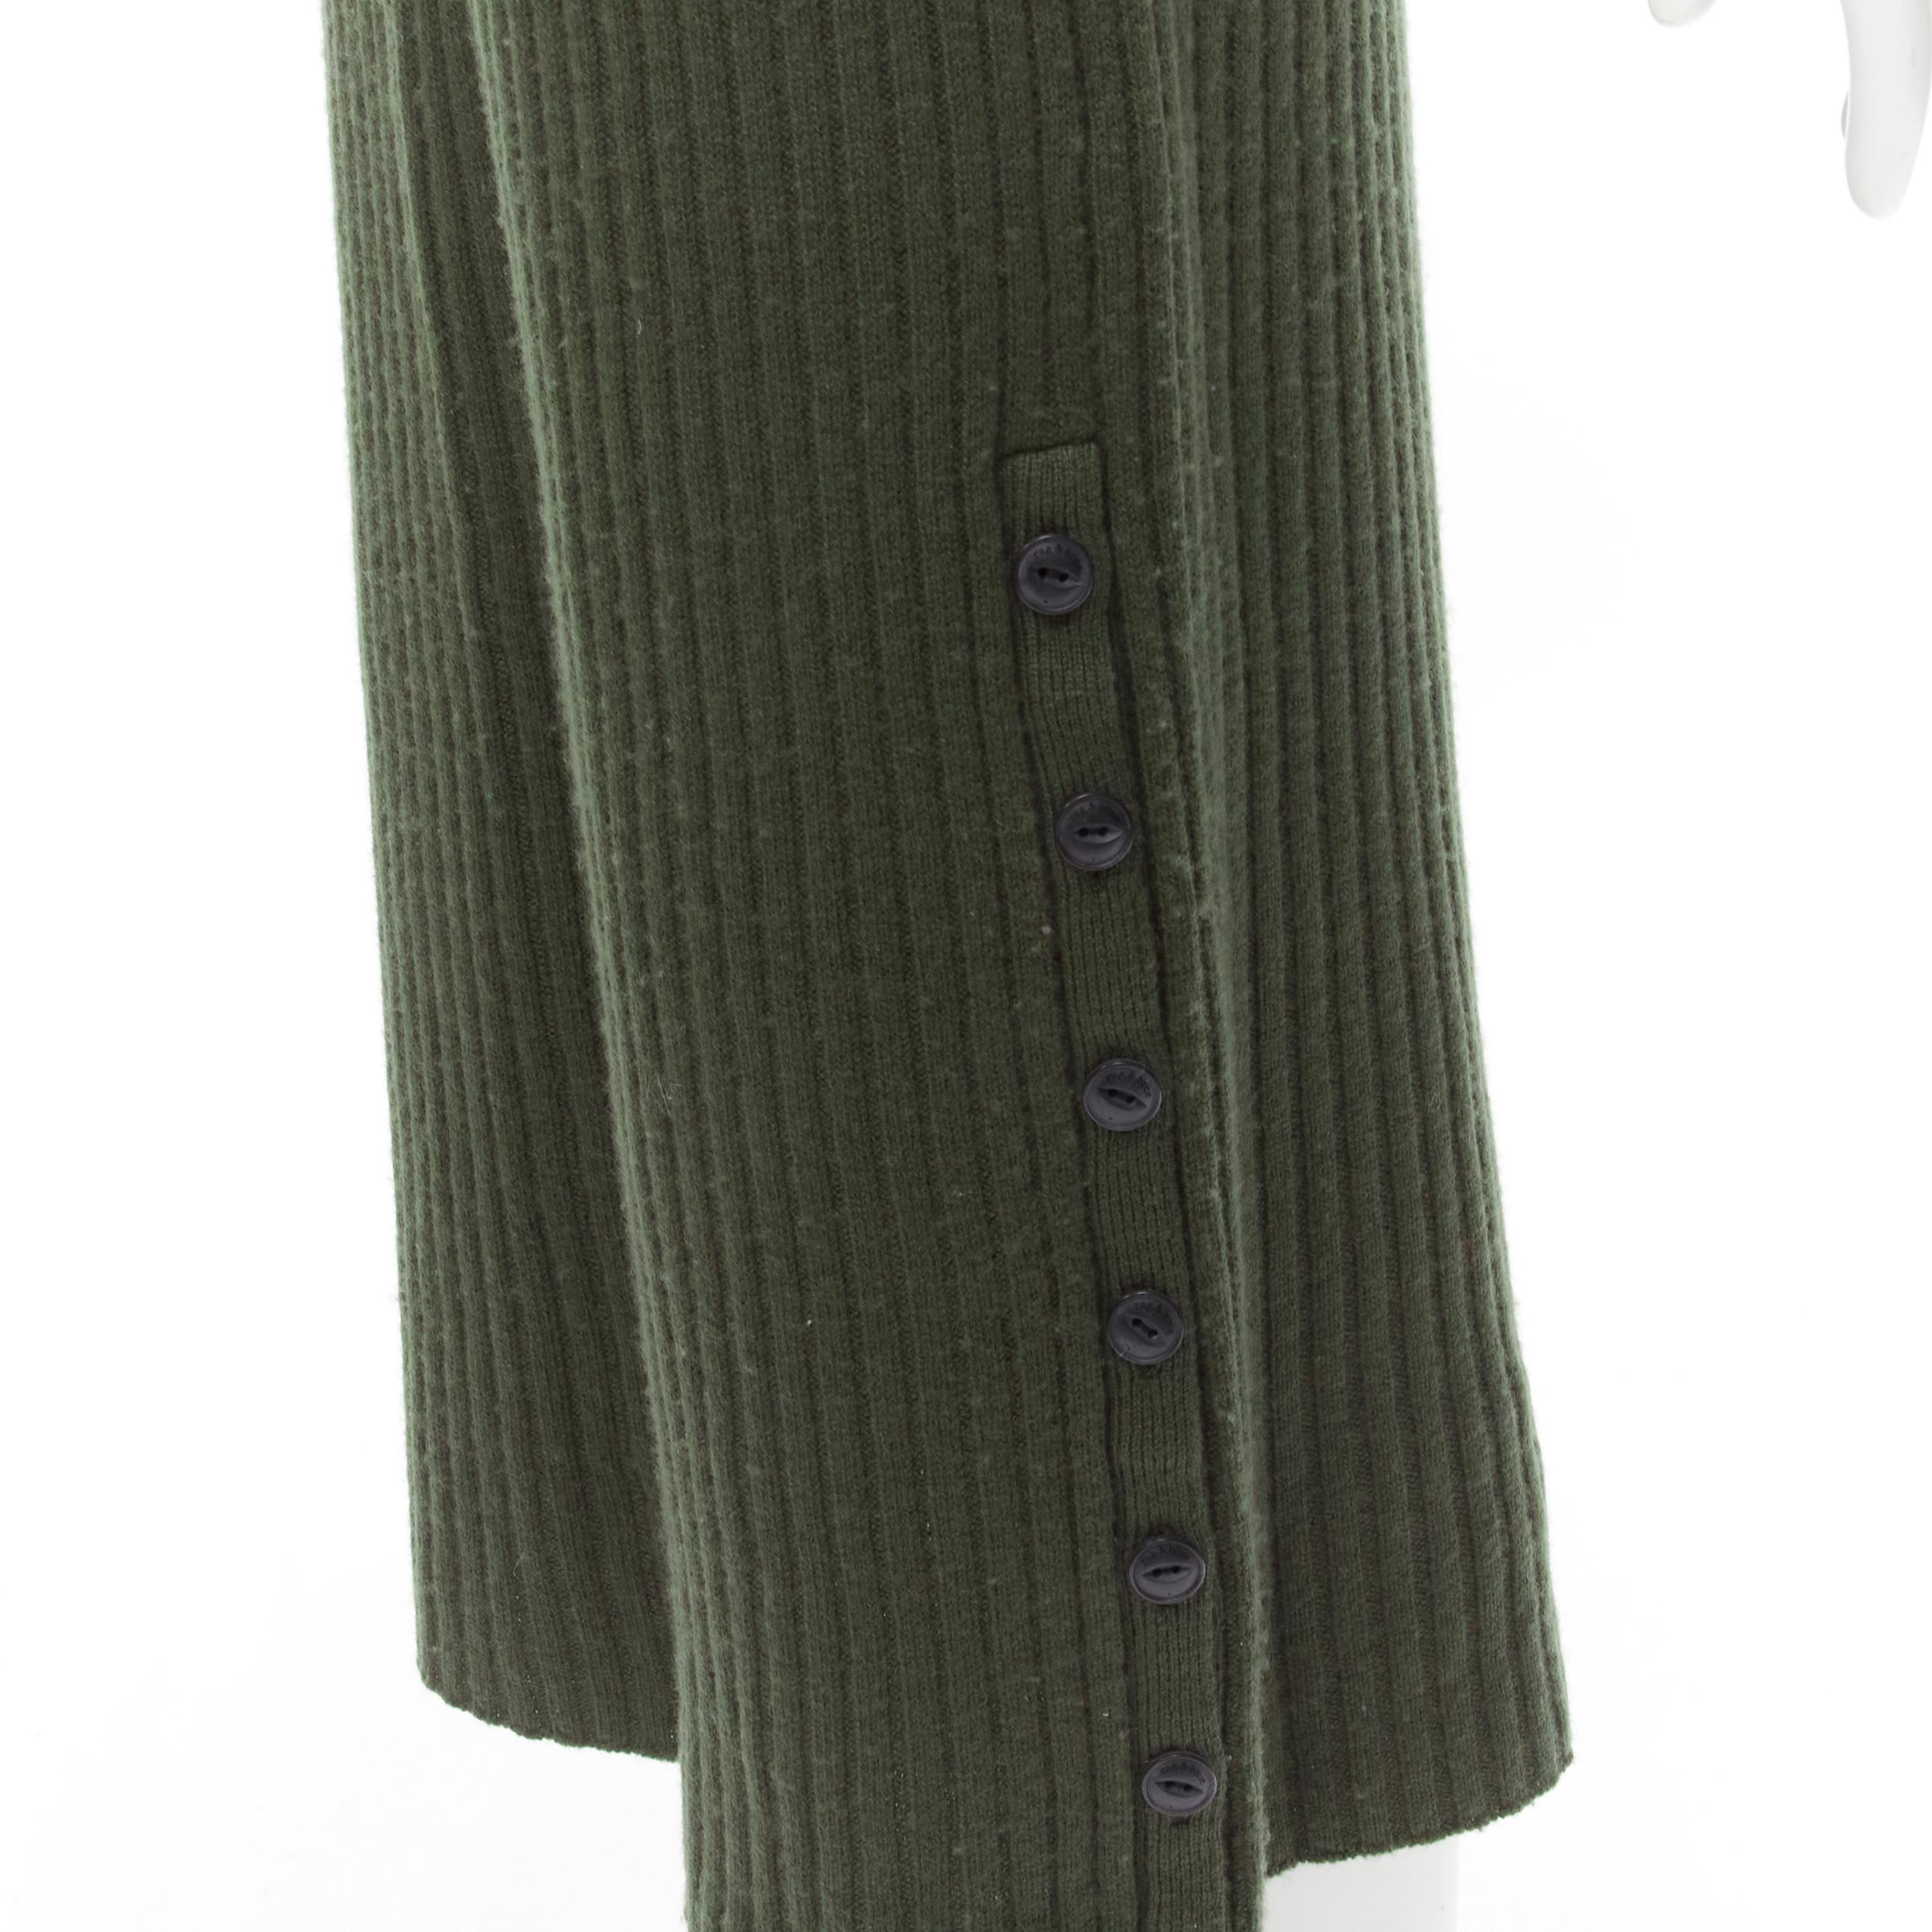 RAG & BONE 100% merino wool braid detail ribbed button side sweater dress S
Brand: Rag Bone
Material: Merino Wool
Color: Green
Pattern: Solid
Extra Detail: High neck. Shoulder epaulette. Braid twist detail at front waist. Button detailing at side